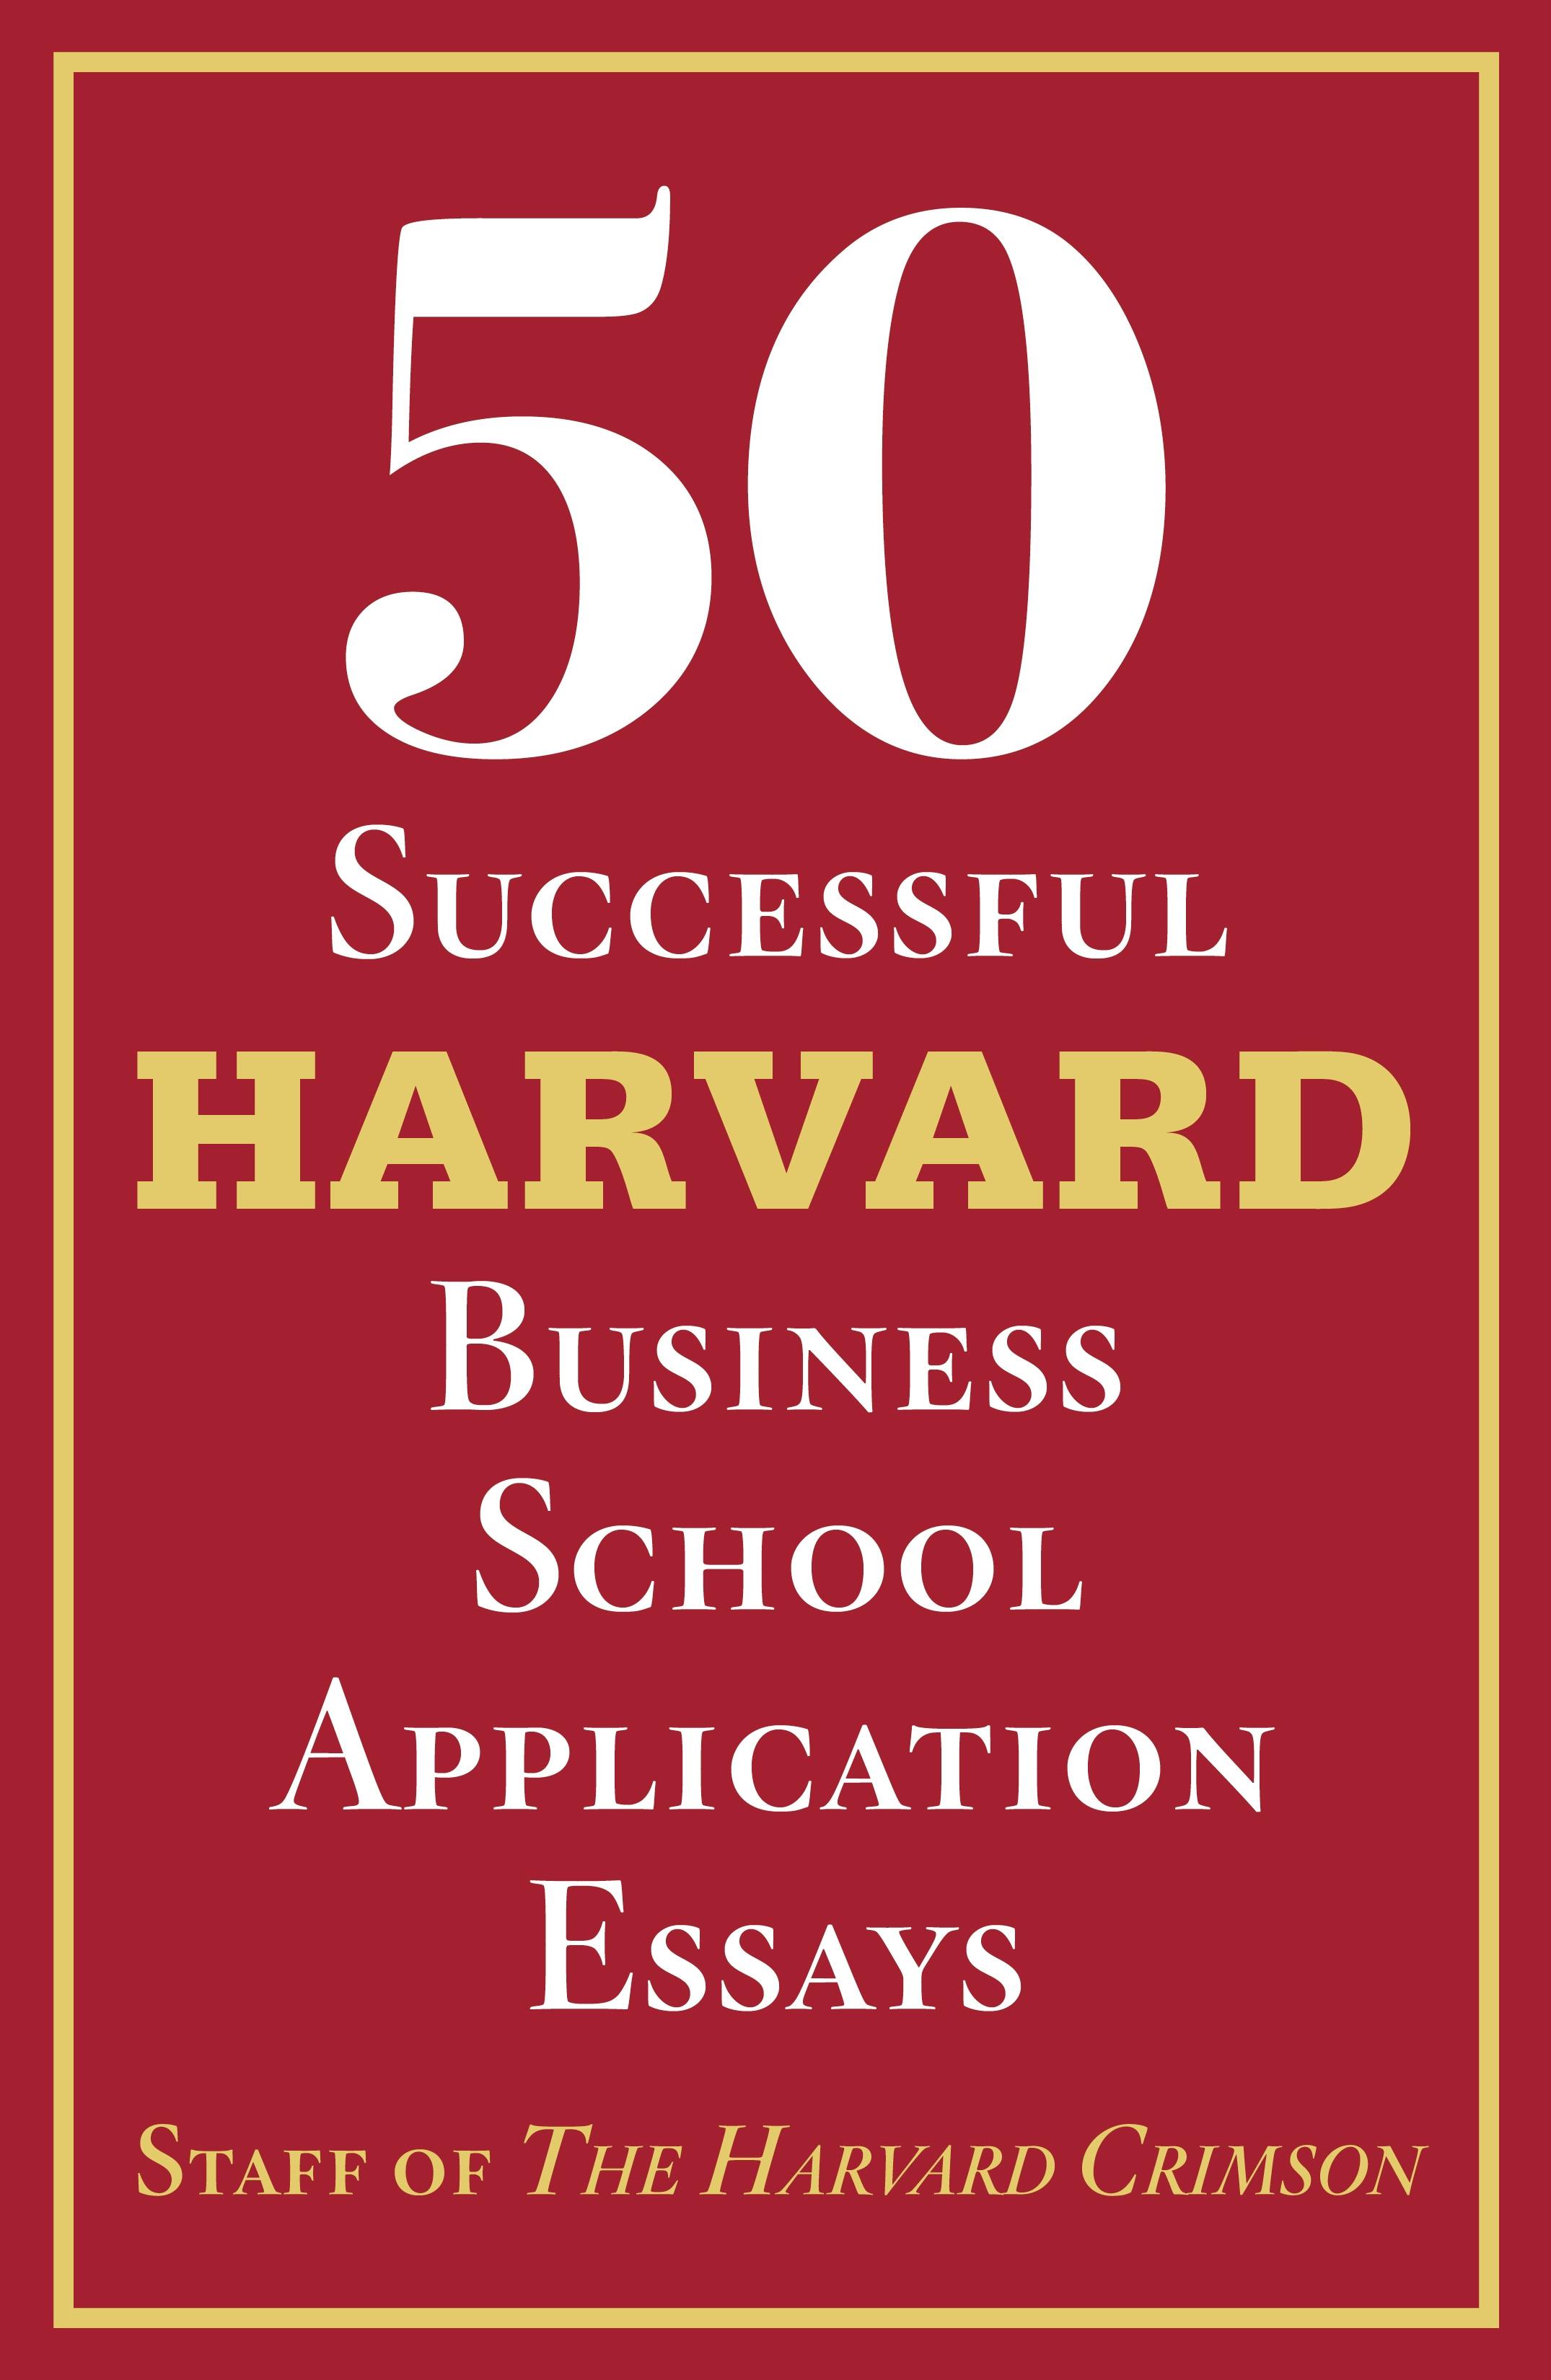 65 successful harvard business school essays